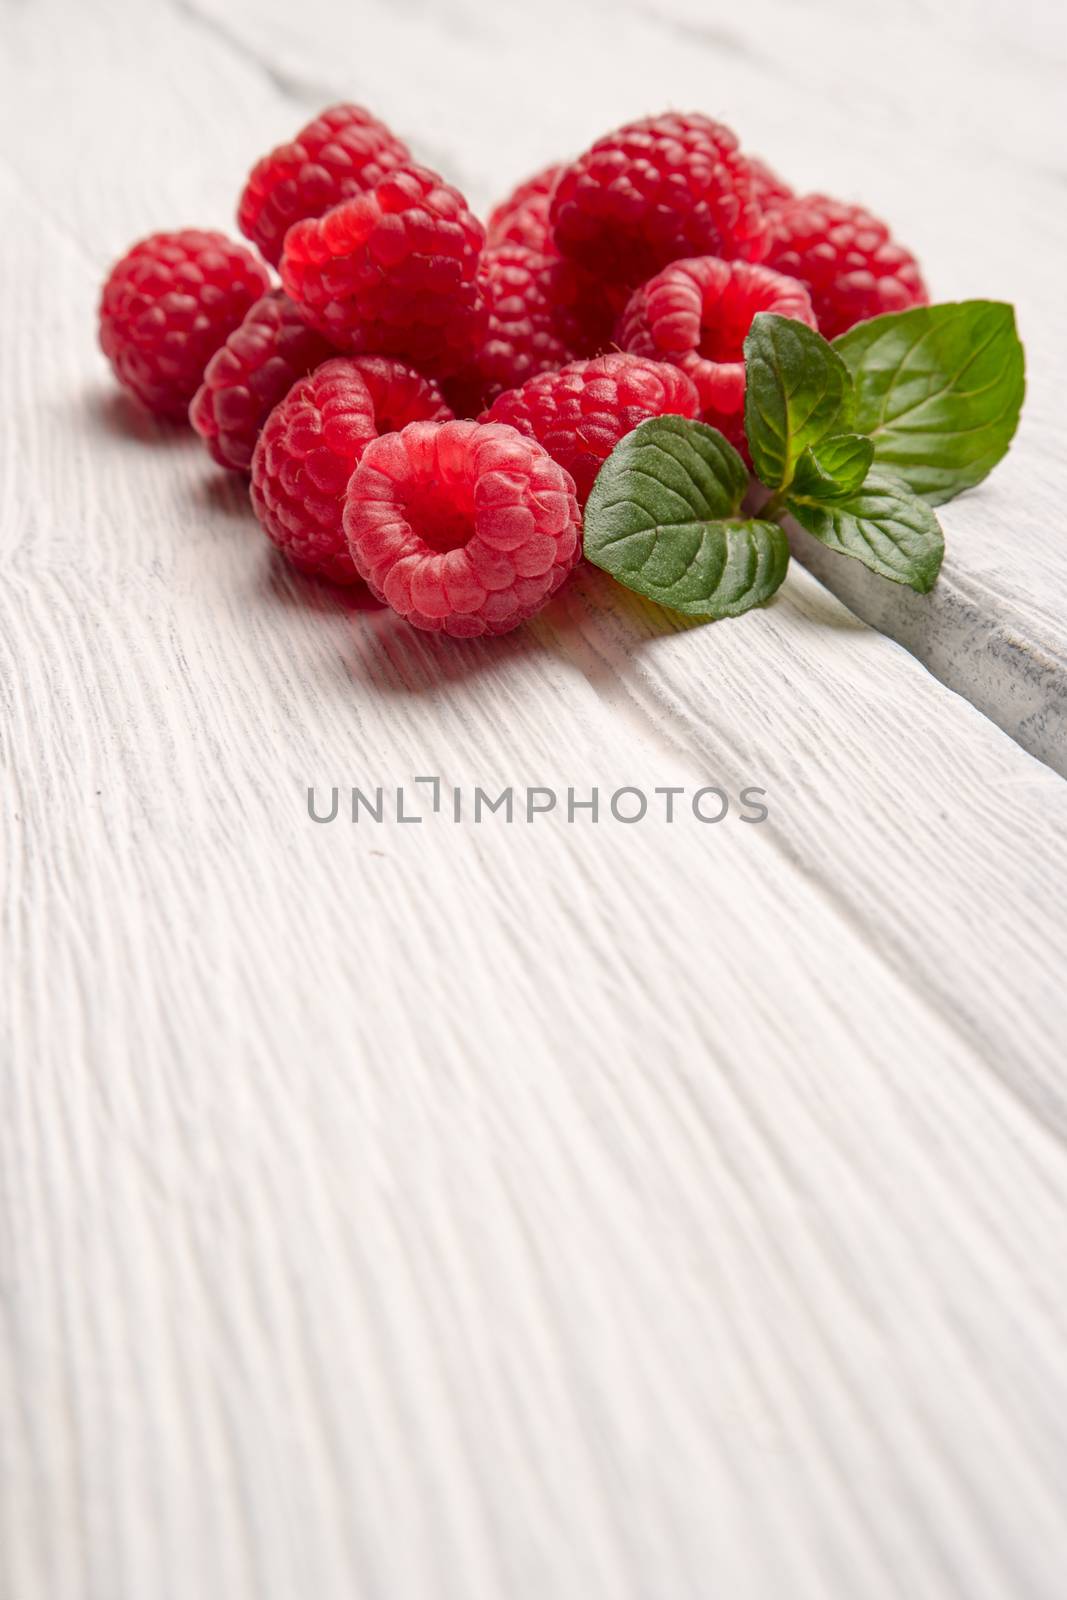 Ripe sweet raspberries on wood table background